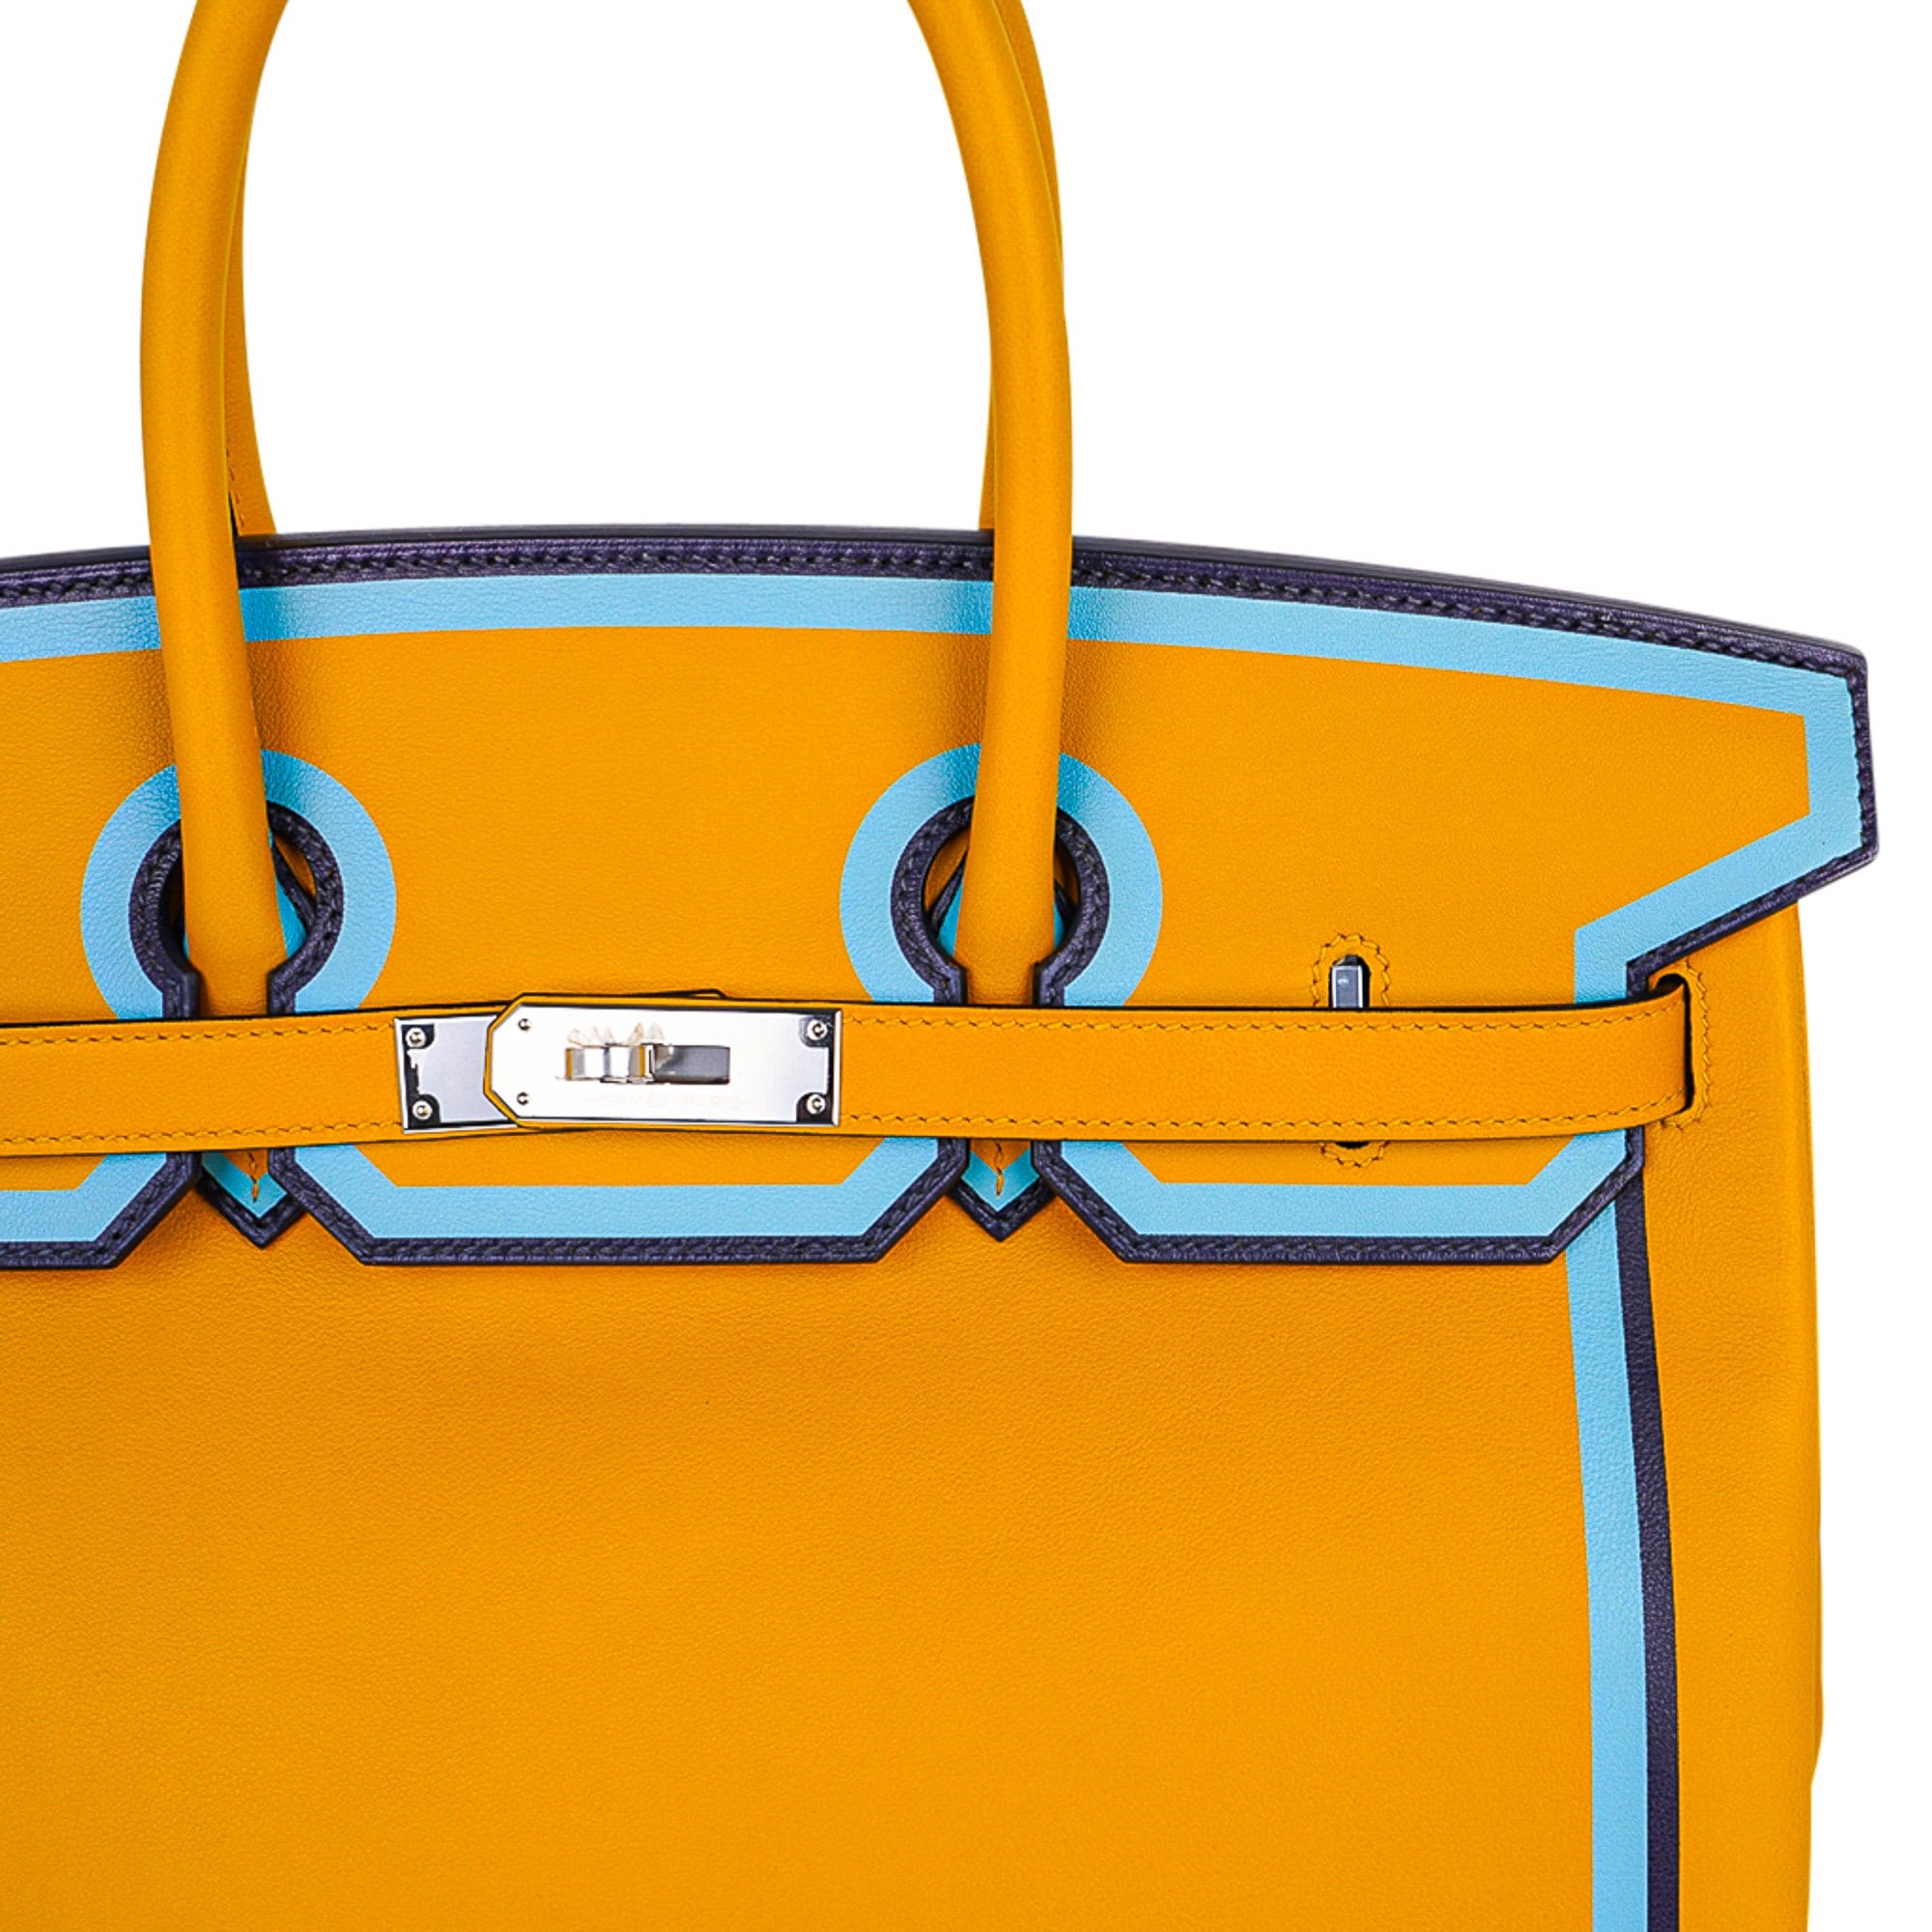 Hermes Birkin 35 Bag Jaune Ambre Blue Indigo Blue Celeste Limited Edition New